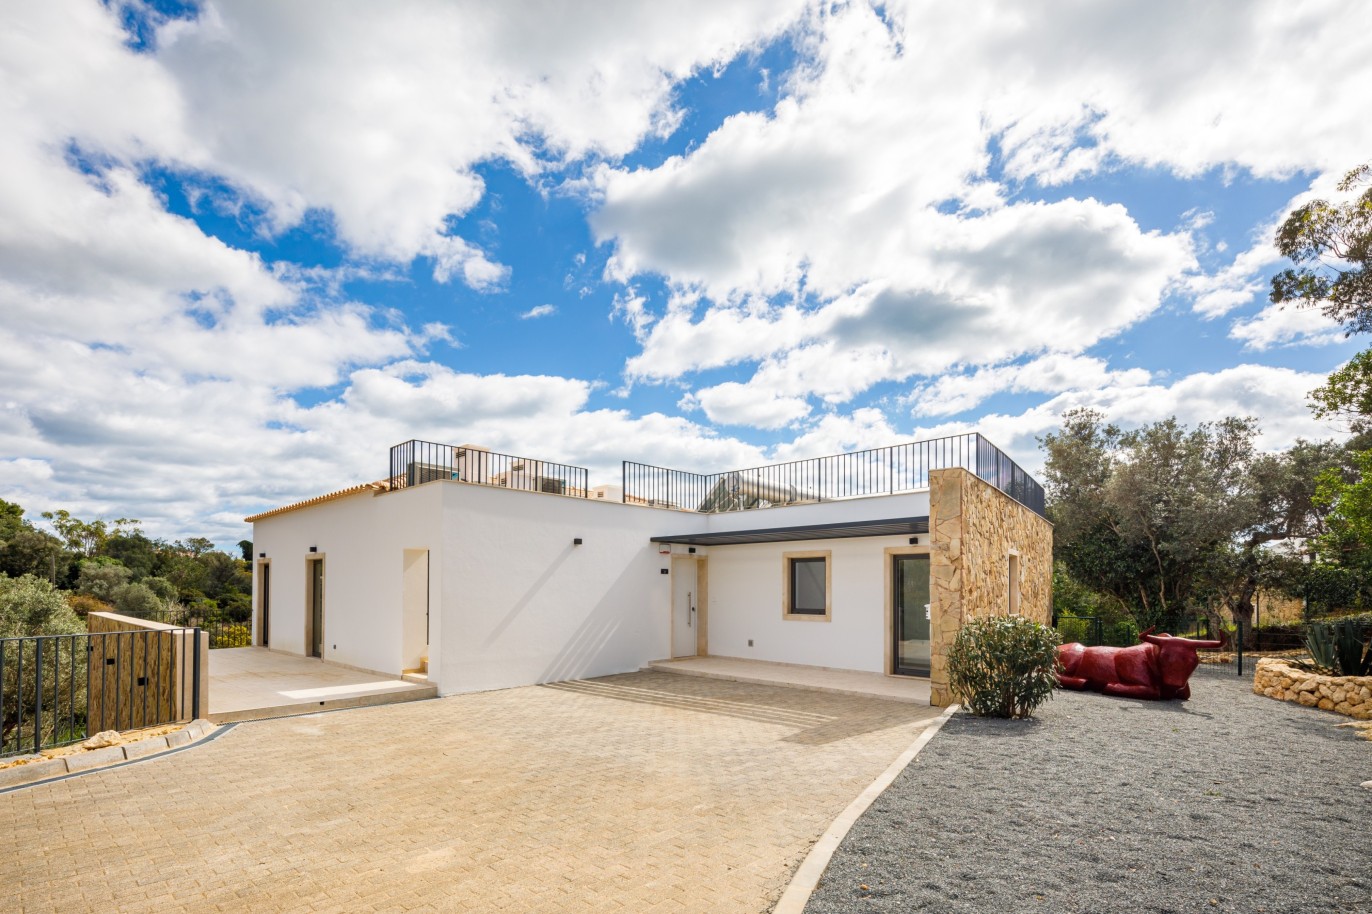 5 Bedroom Villa in luxury condominium with private pool, Carvoeiro, Algarve_259436